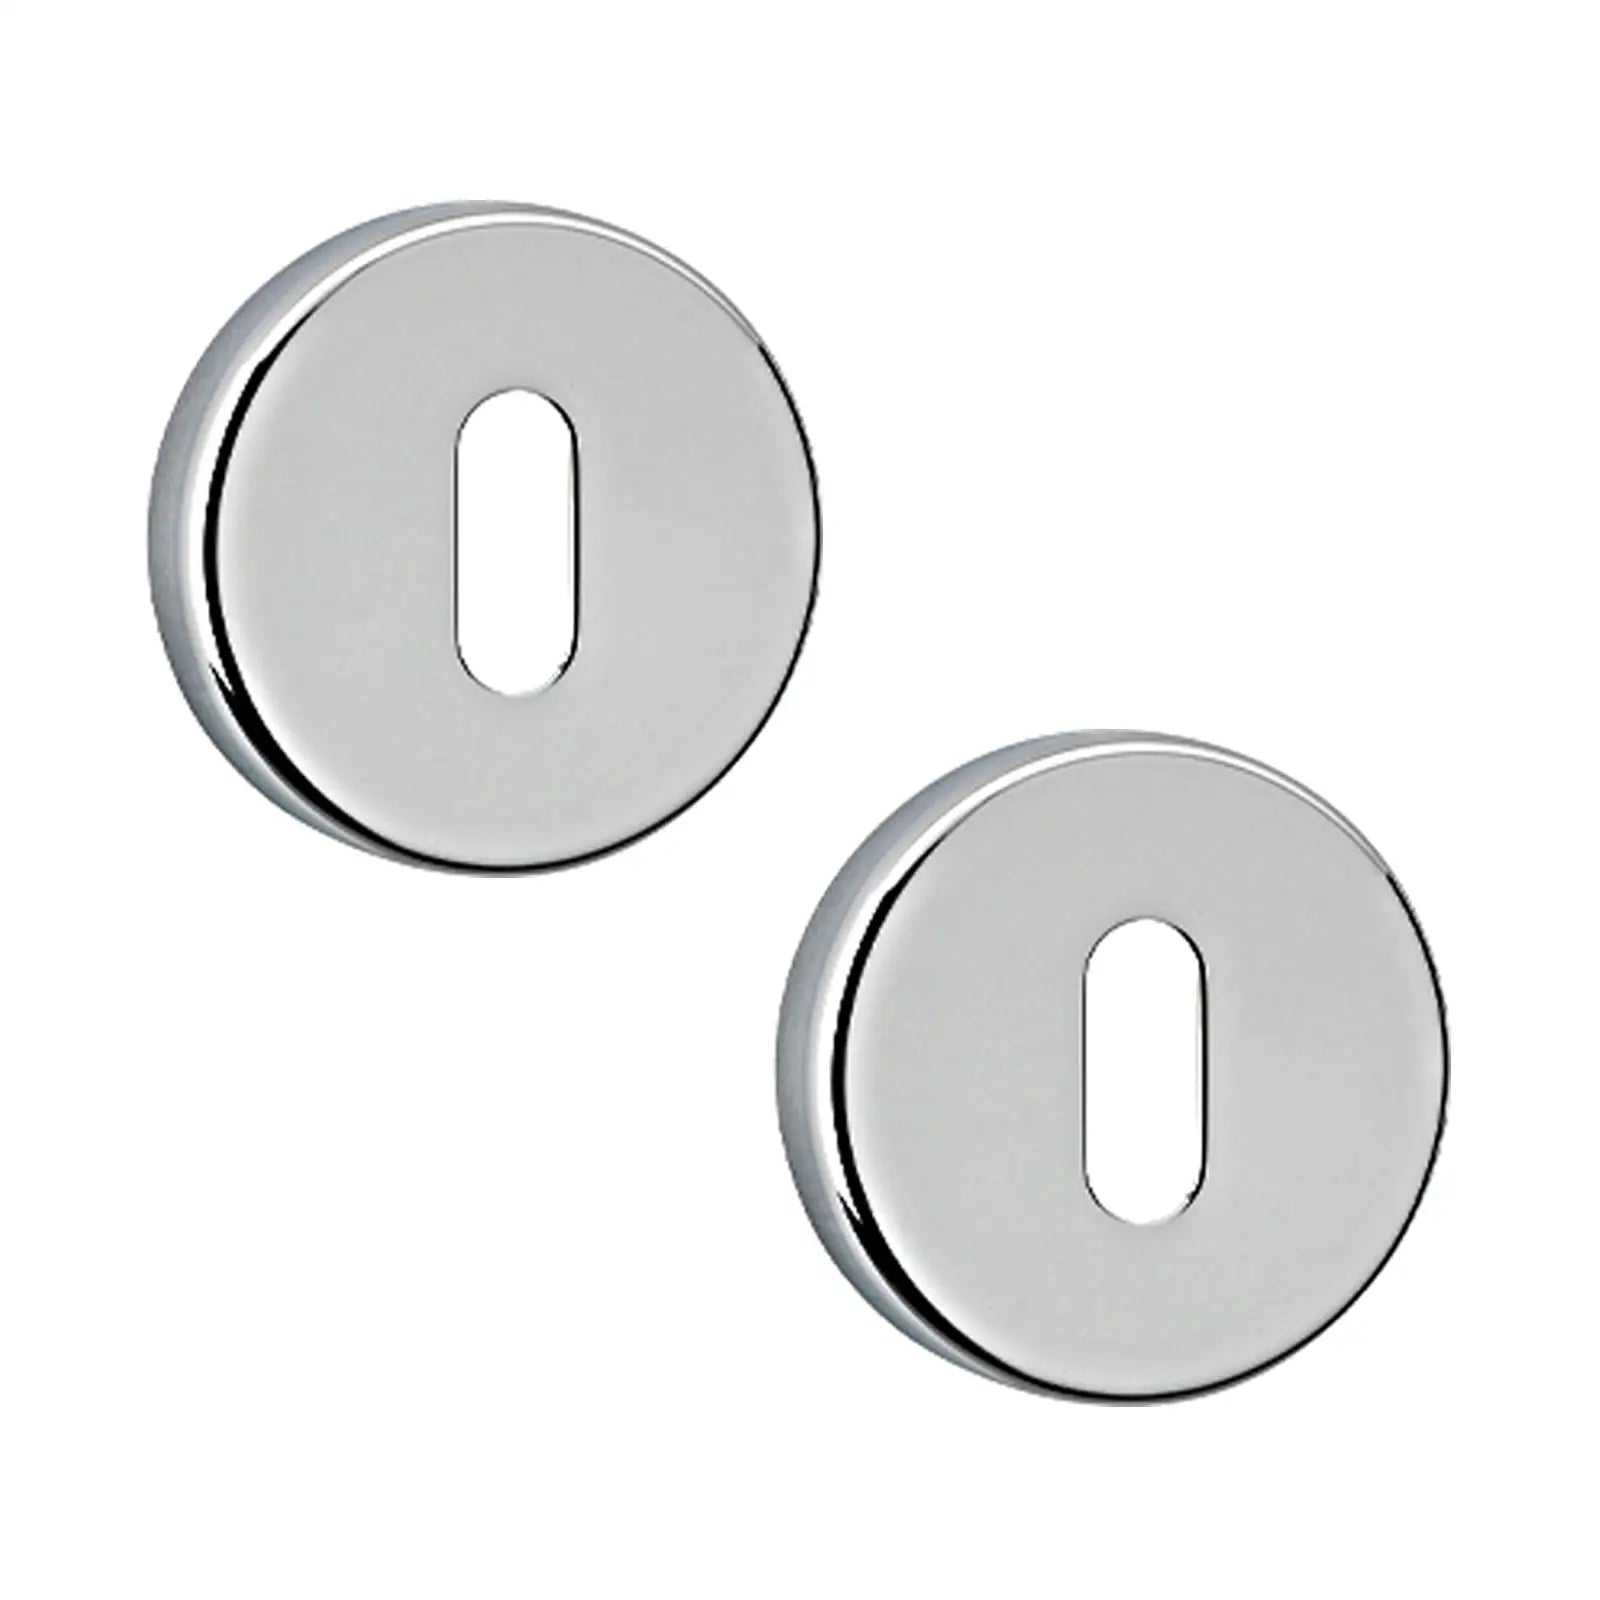 Keyhole Cover Escutcheon - Polished Chrome - Decor And Decor